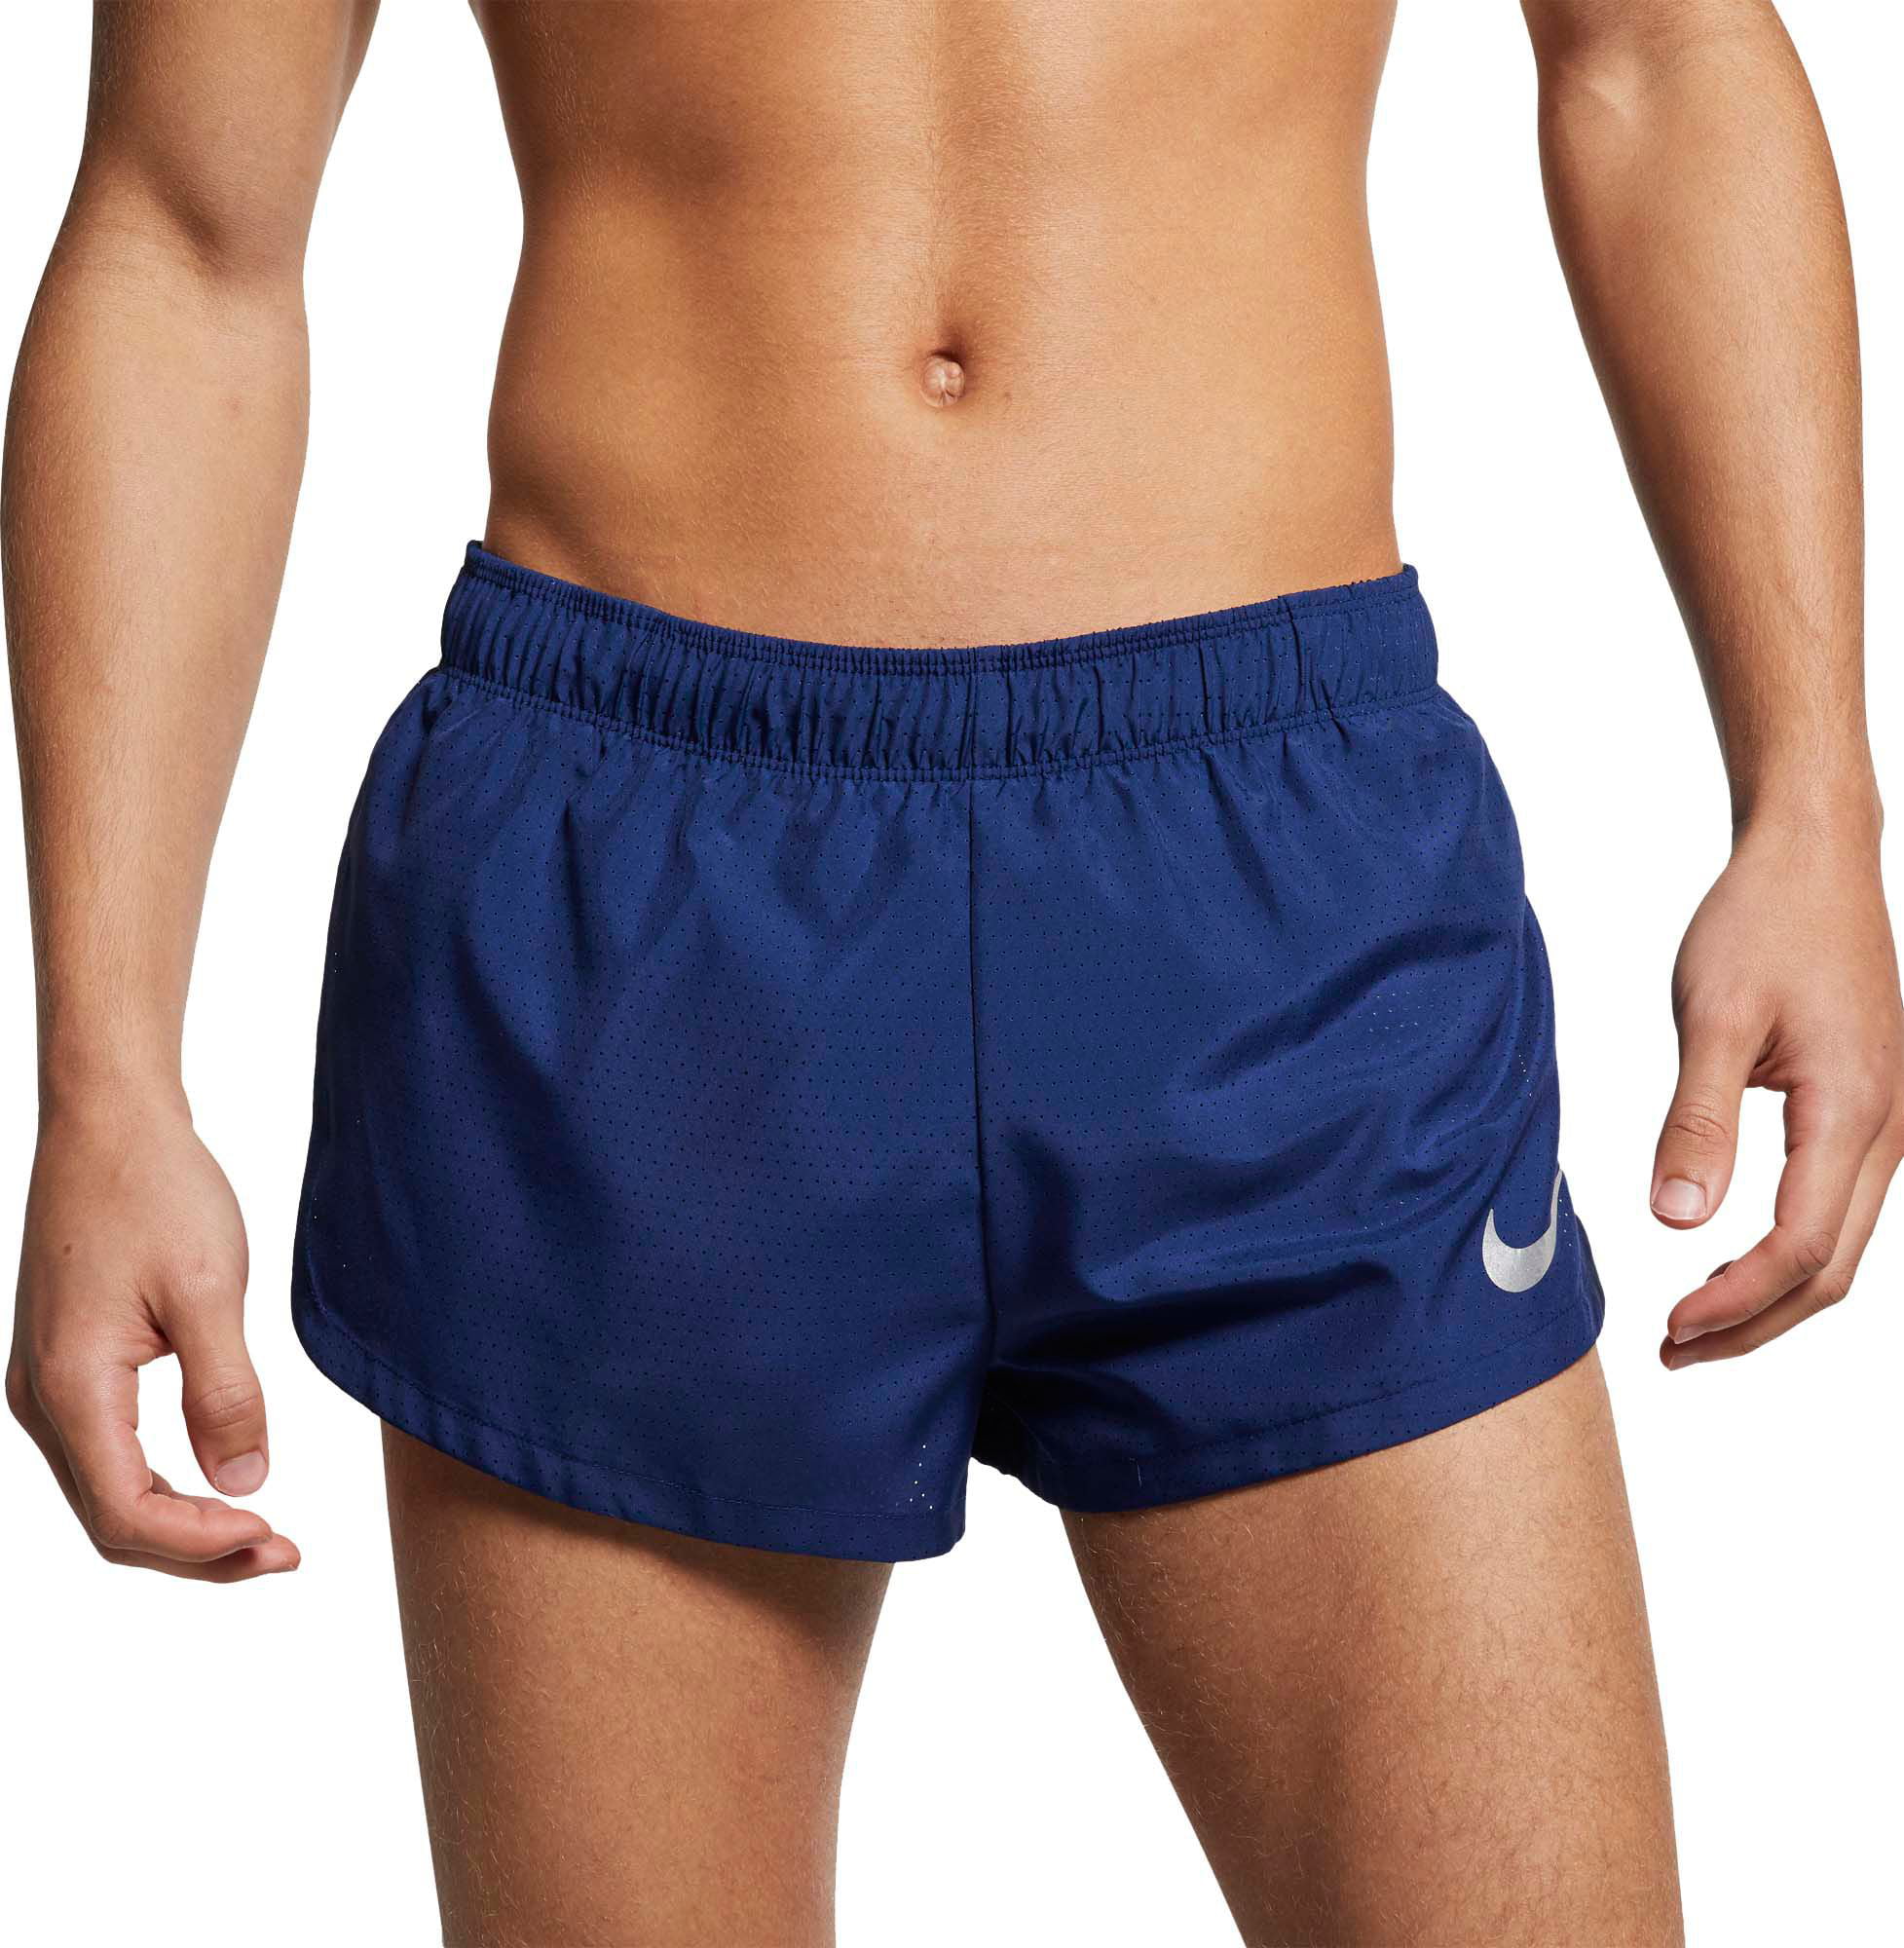 Nike - Nike Men's Lined 2'' Running Shorts - Walmart.com - Walmart.com